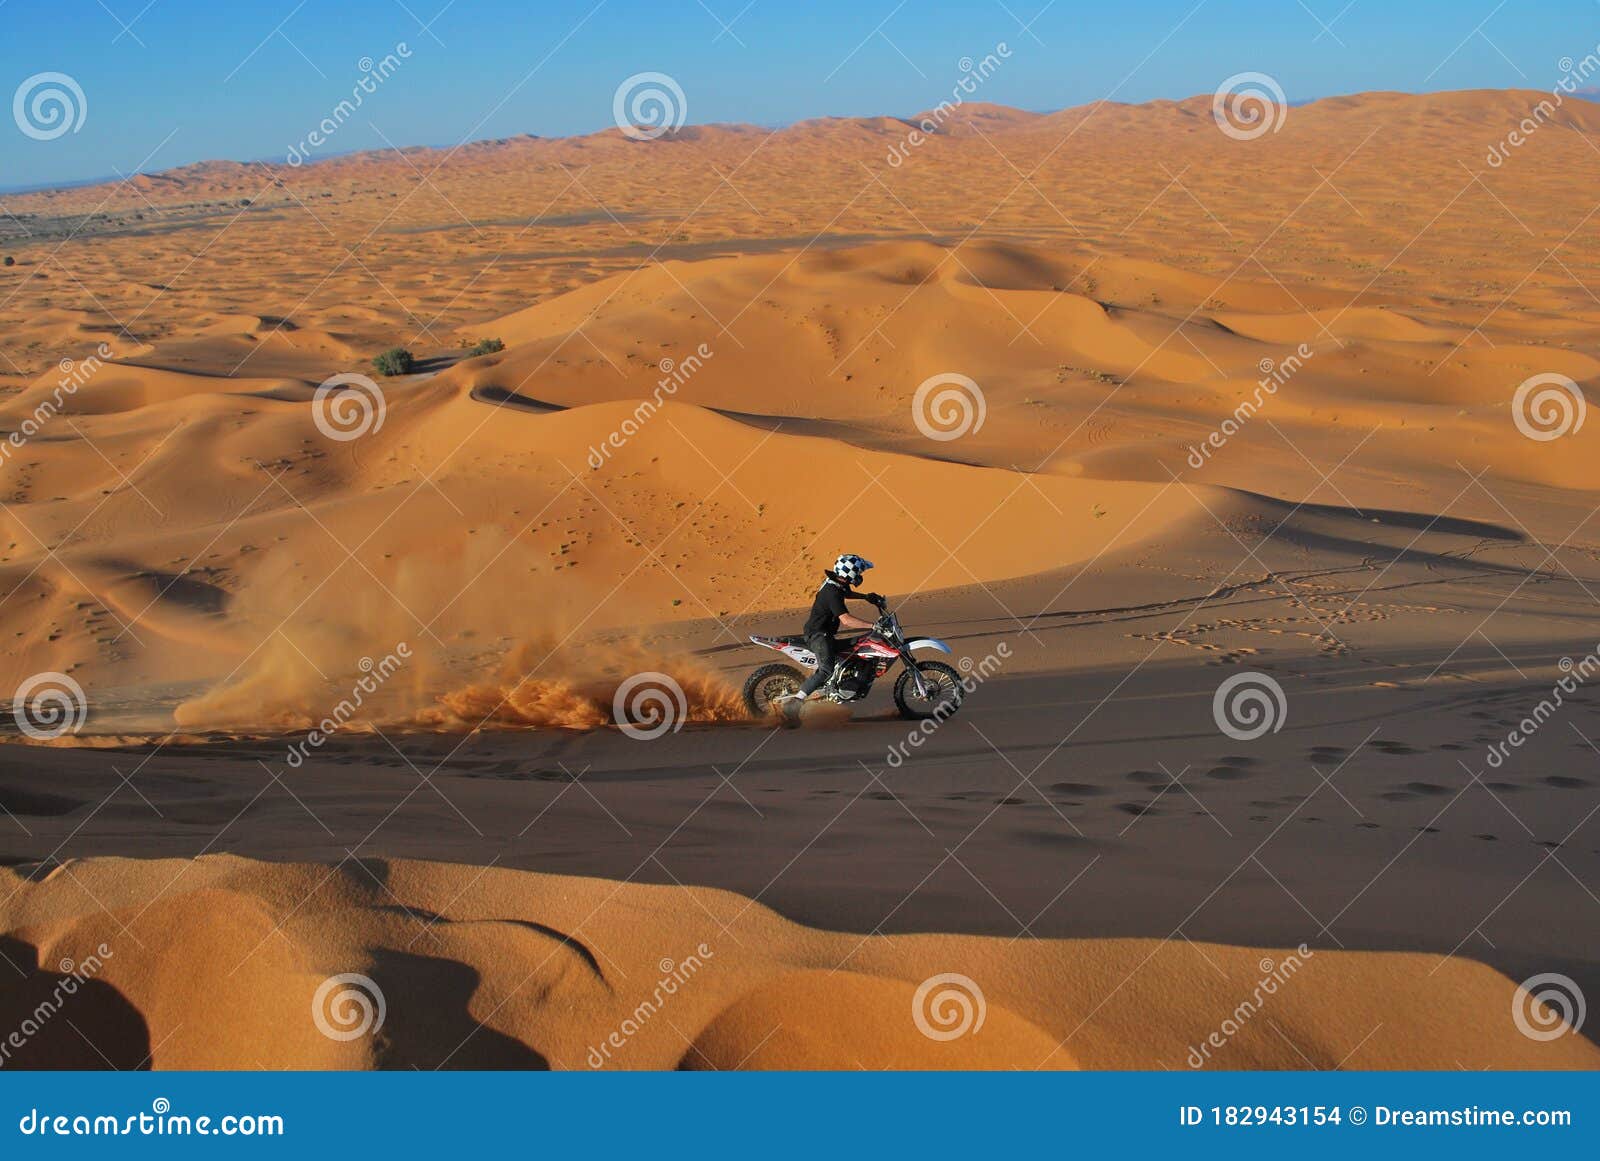 riding motorbike in the sahara dunes